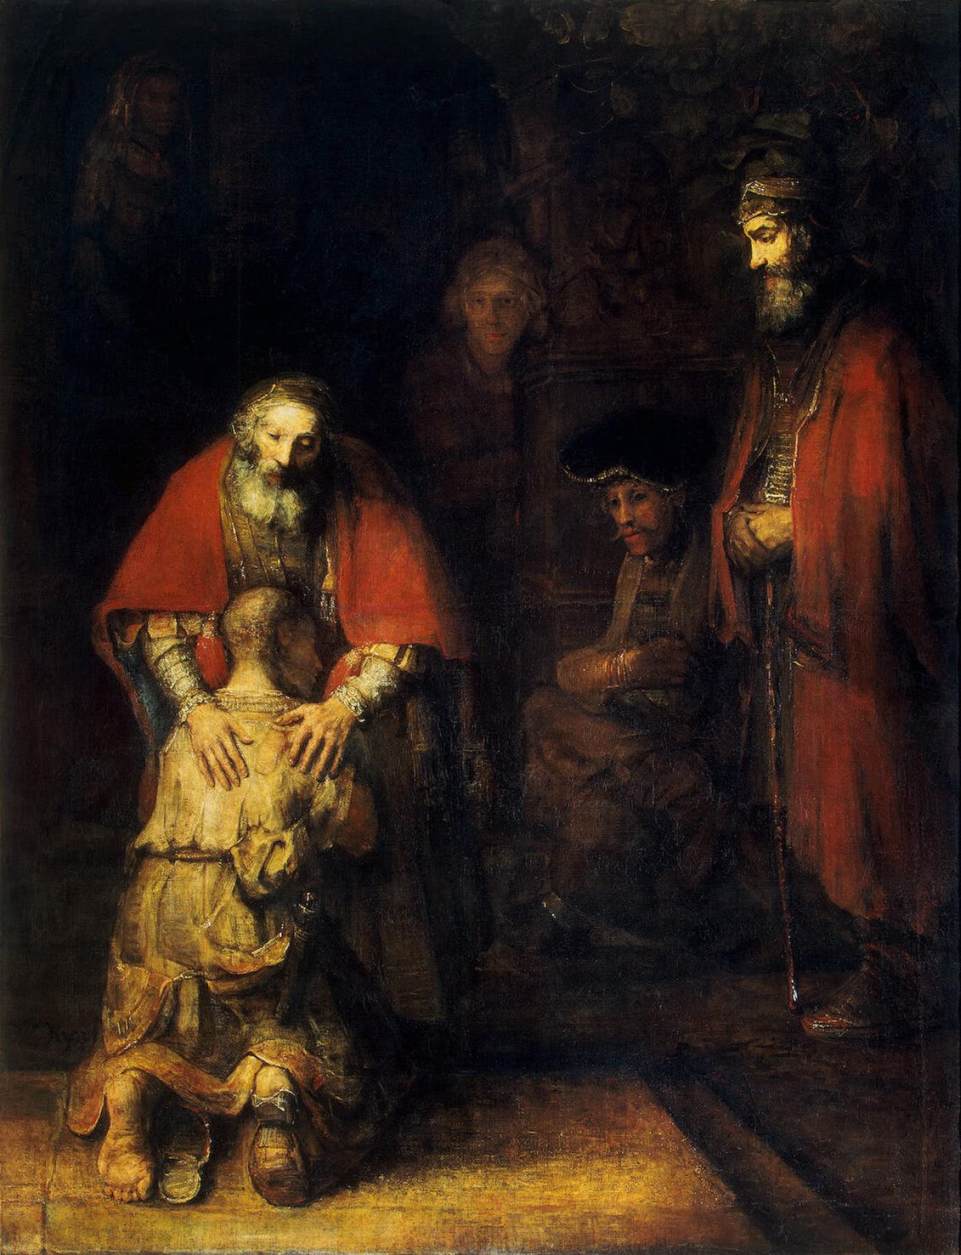 Rembrandt, Public domain, via Wikimedia Commons